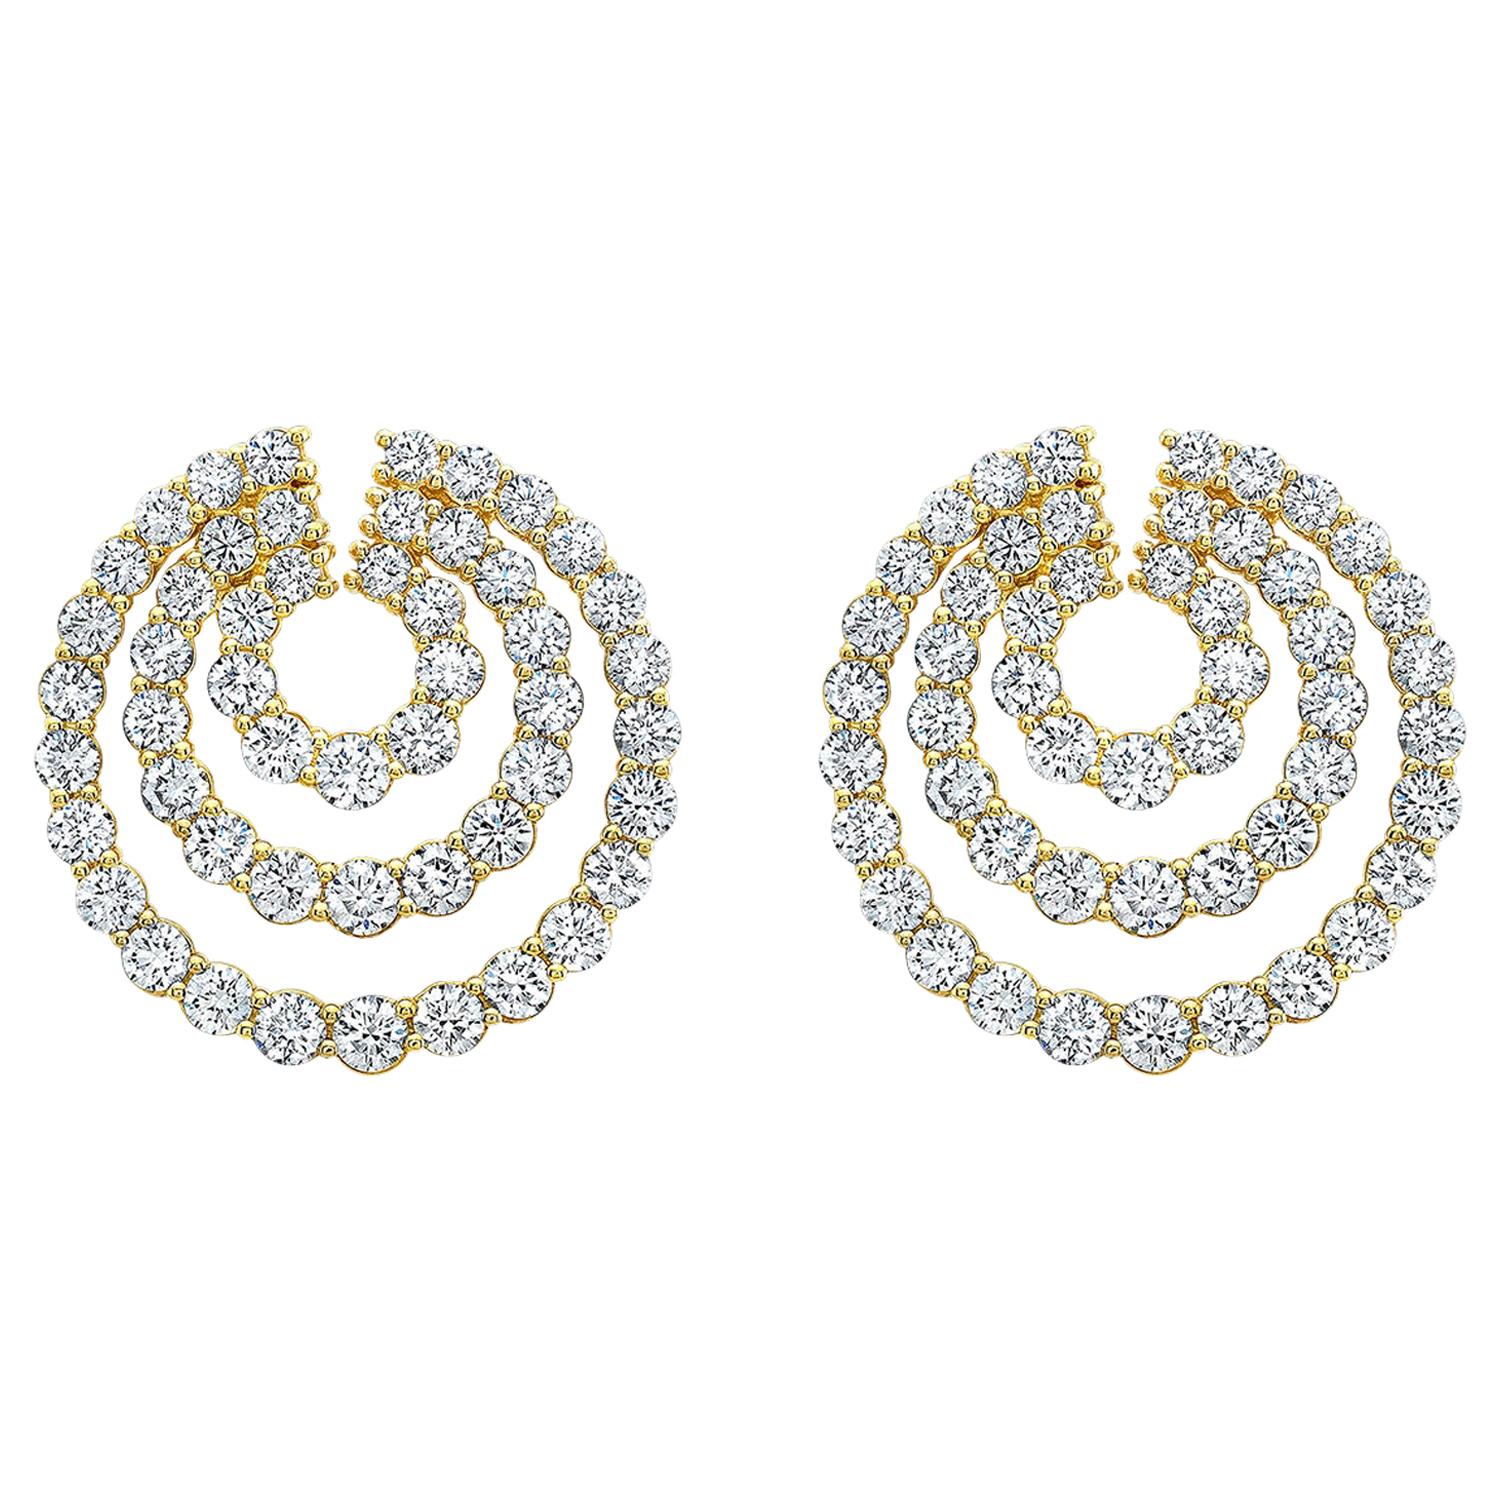 Swirl Earrings with Round Brilliant Cut Diamonds